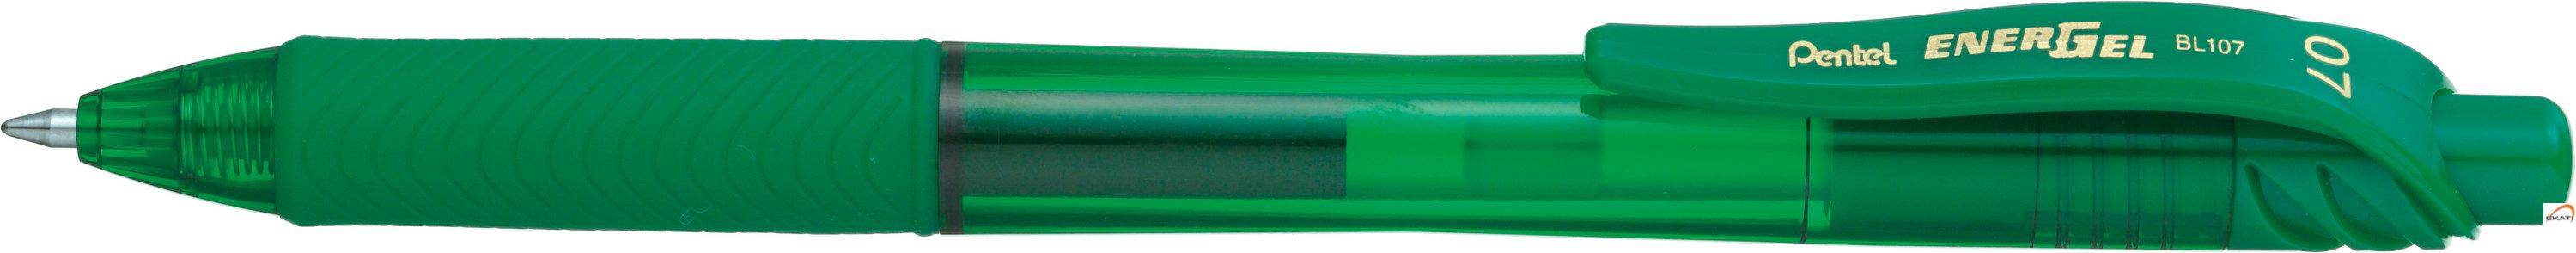 Pióro kulkowe 0 7mm ENERGEL zielone